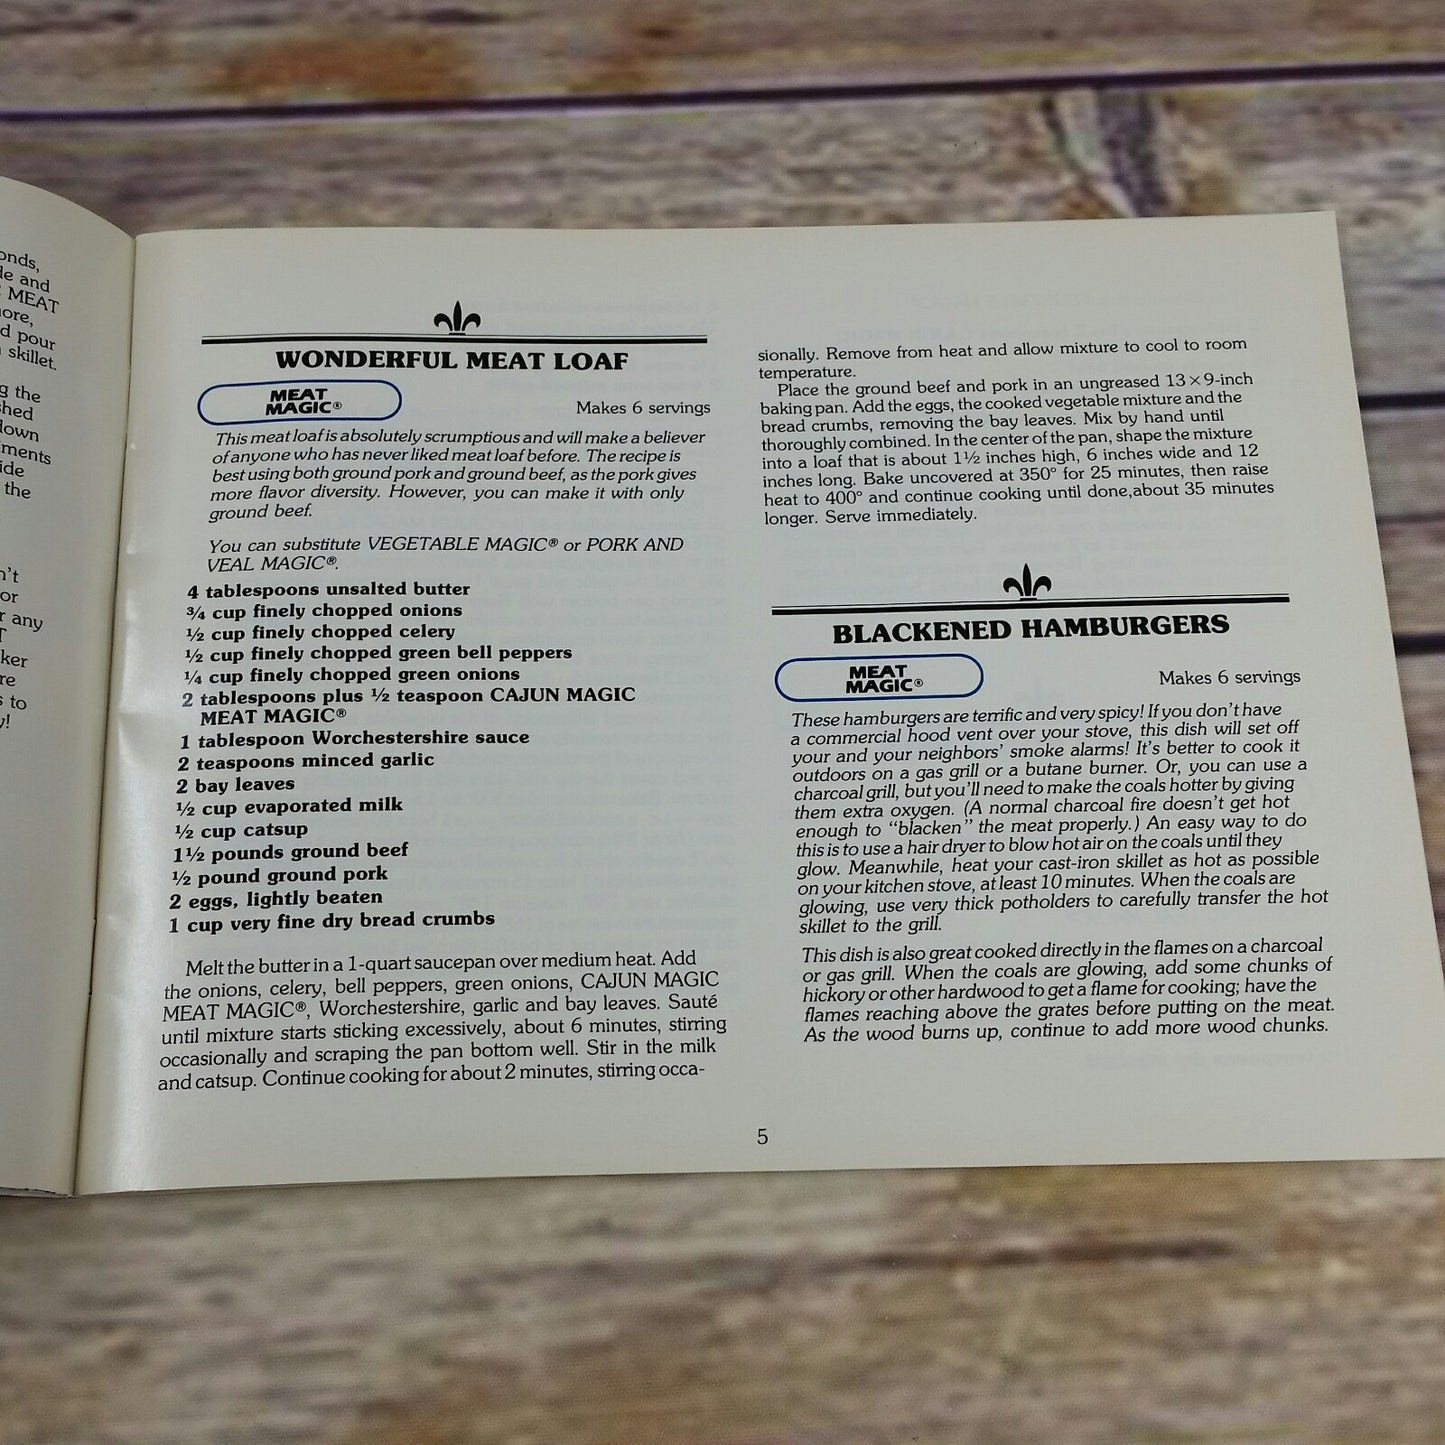 Vintage Cookbook 1988 K-Paul's Louisiana Cajun Magic  Chef Paul Prudhomme's Recipes Paperback - At Grandma's Table